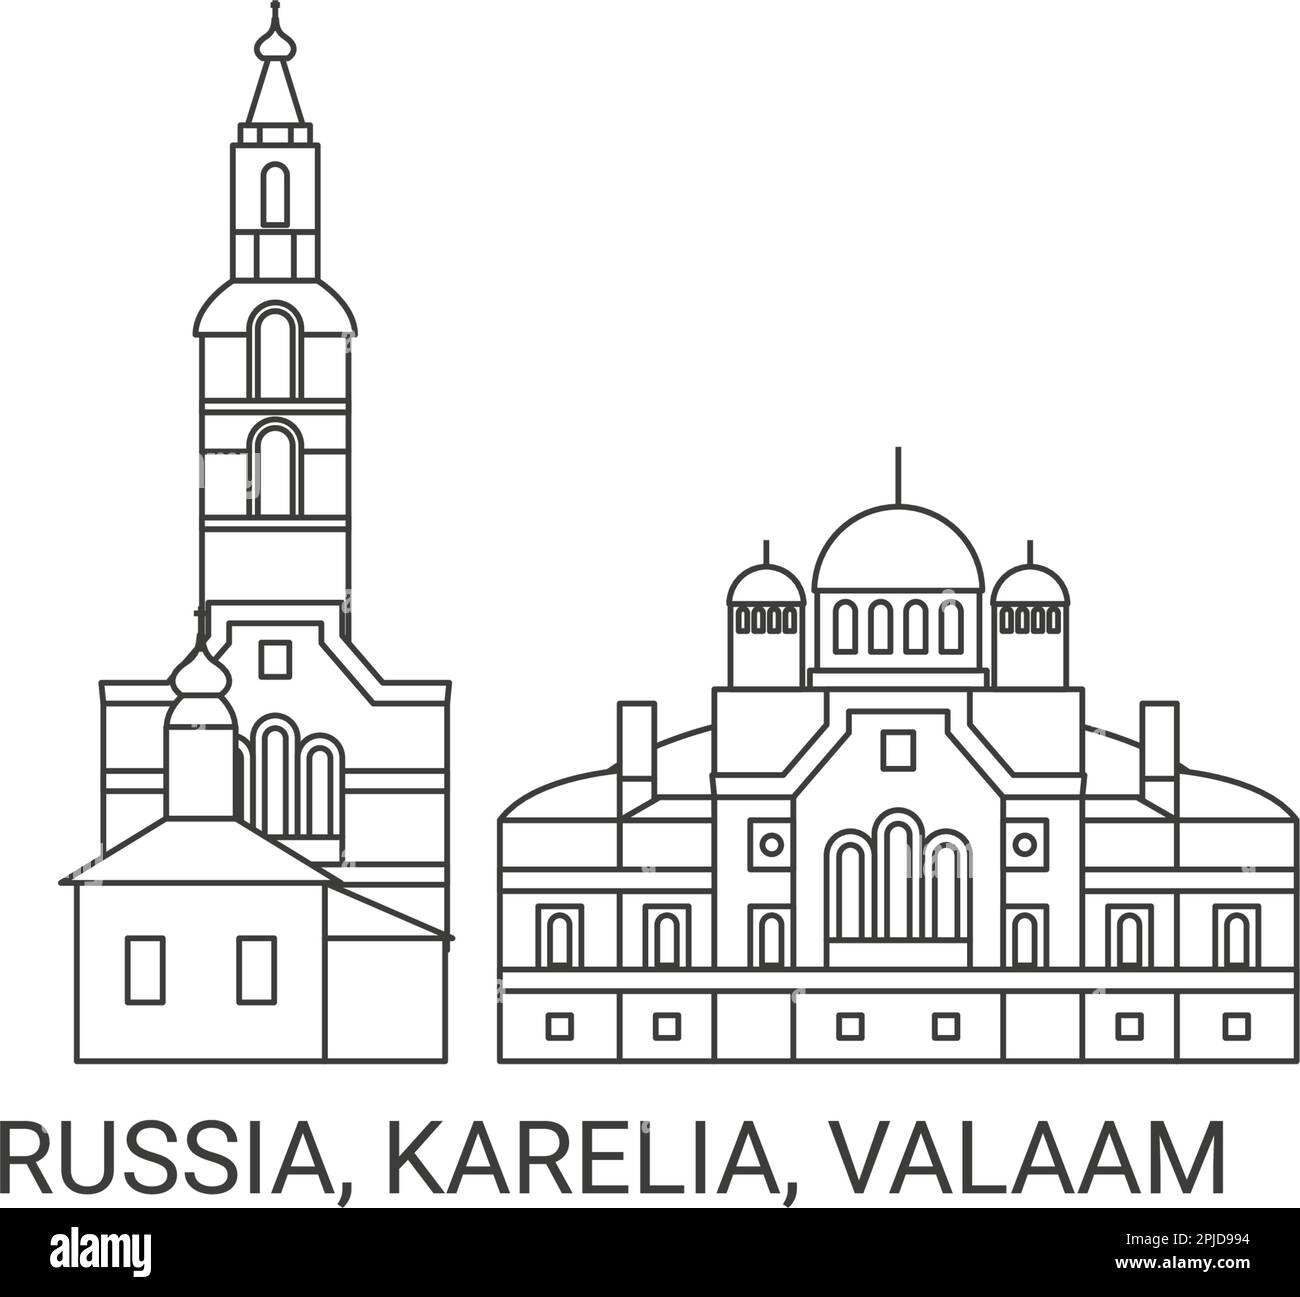 Russia, Karelia, Valaam, travel landmark vector illustration Stock Vector